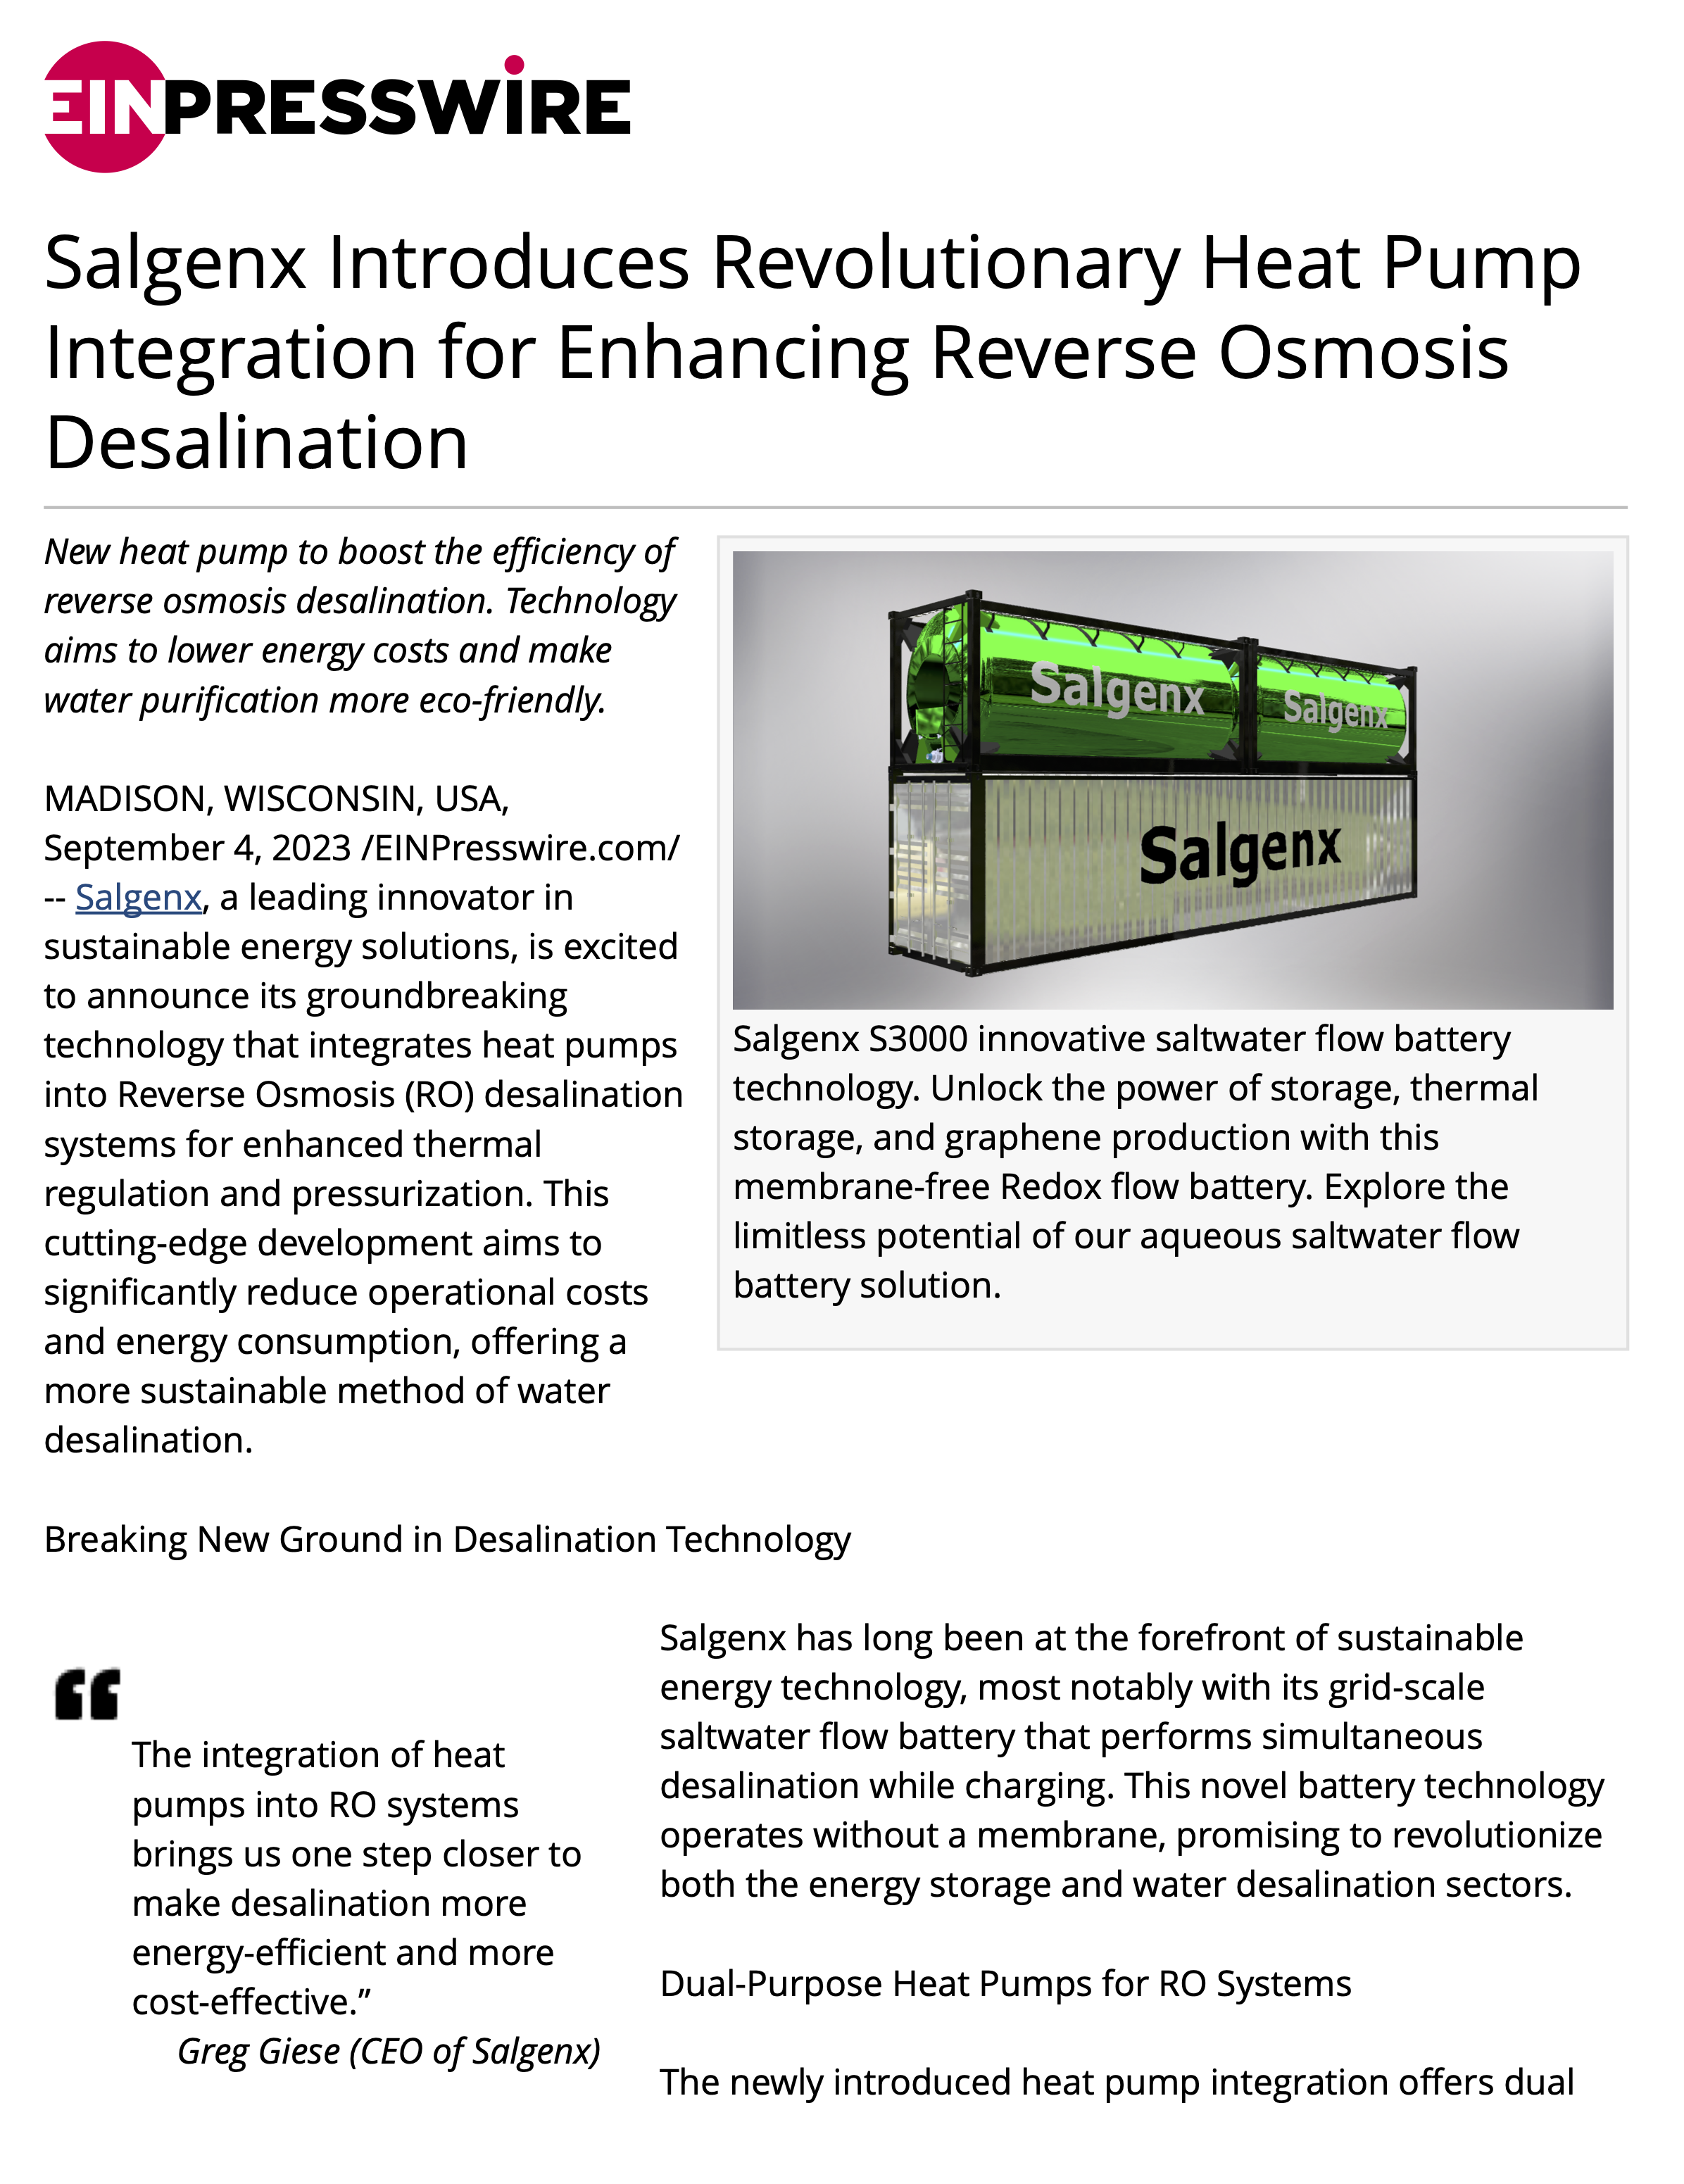 Salgenx Introduces Revolutionary Heat Pump Integration for Enhancing Reverse Osmosis Desalination